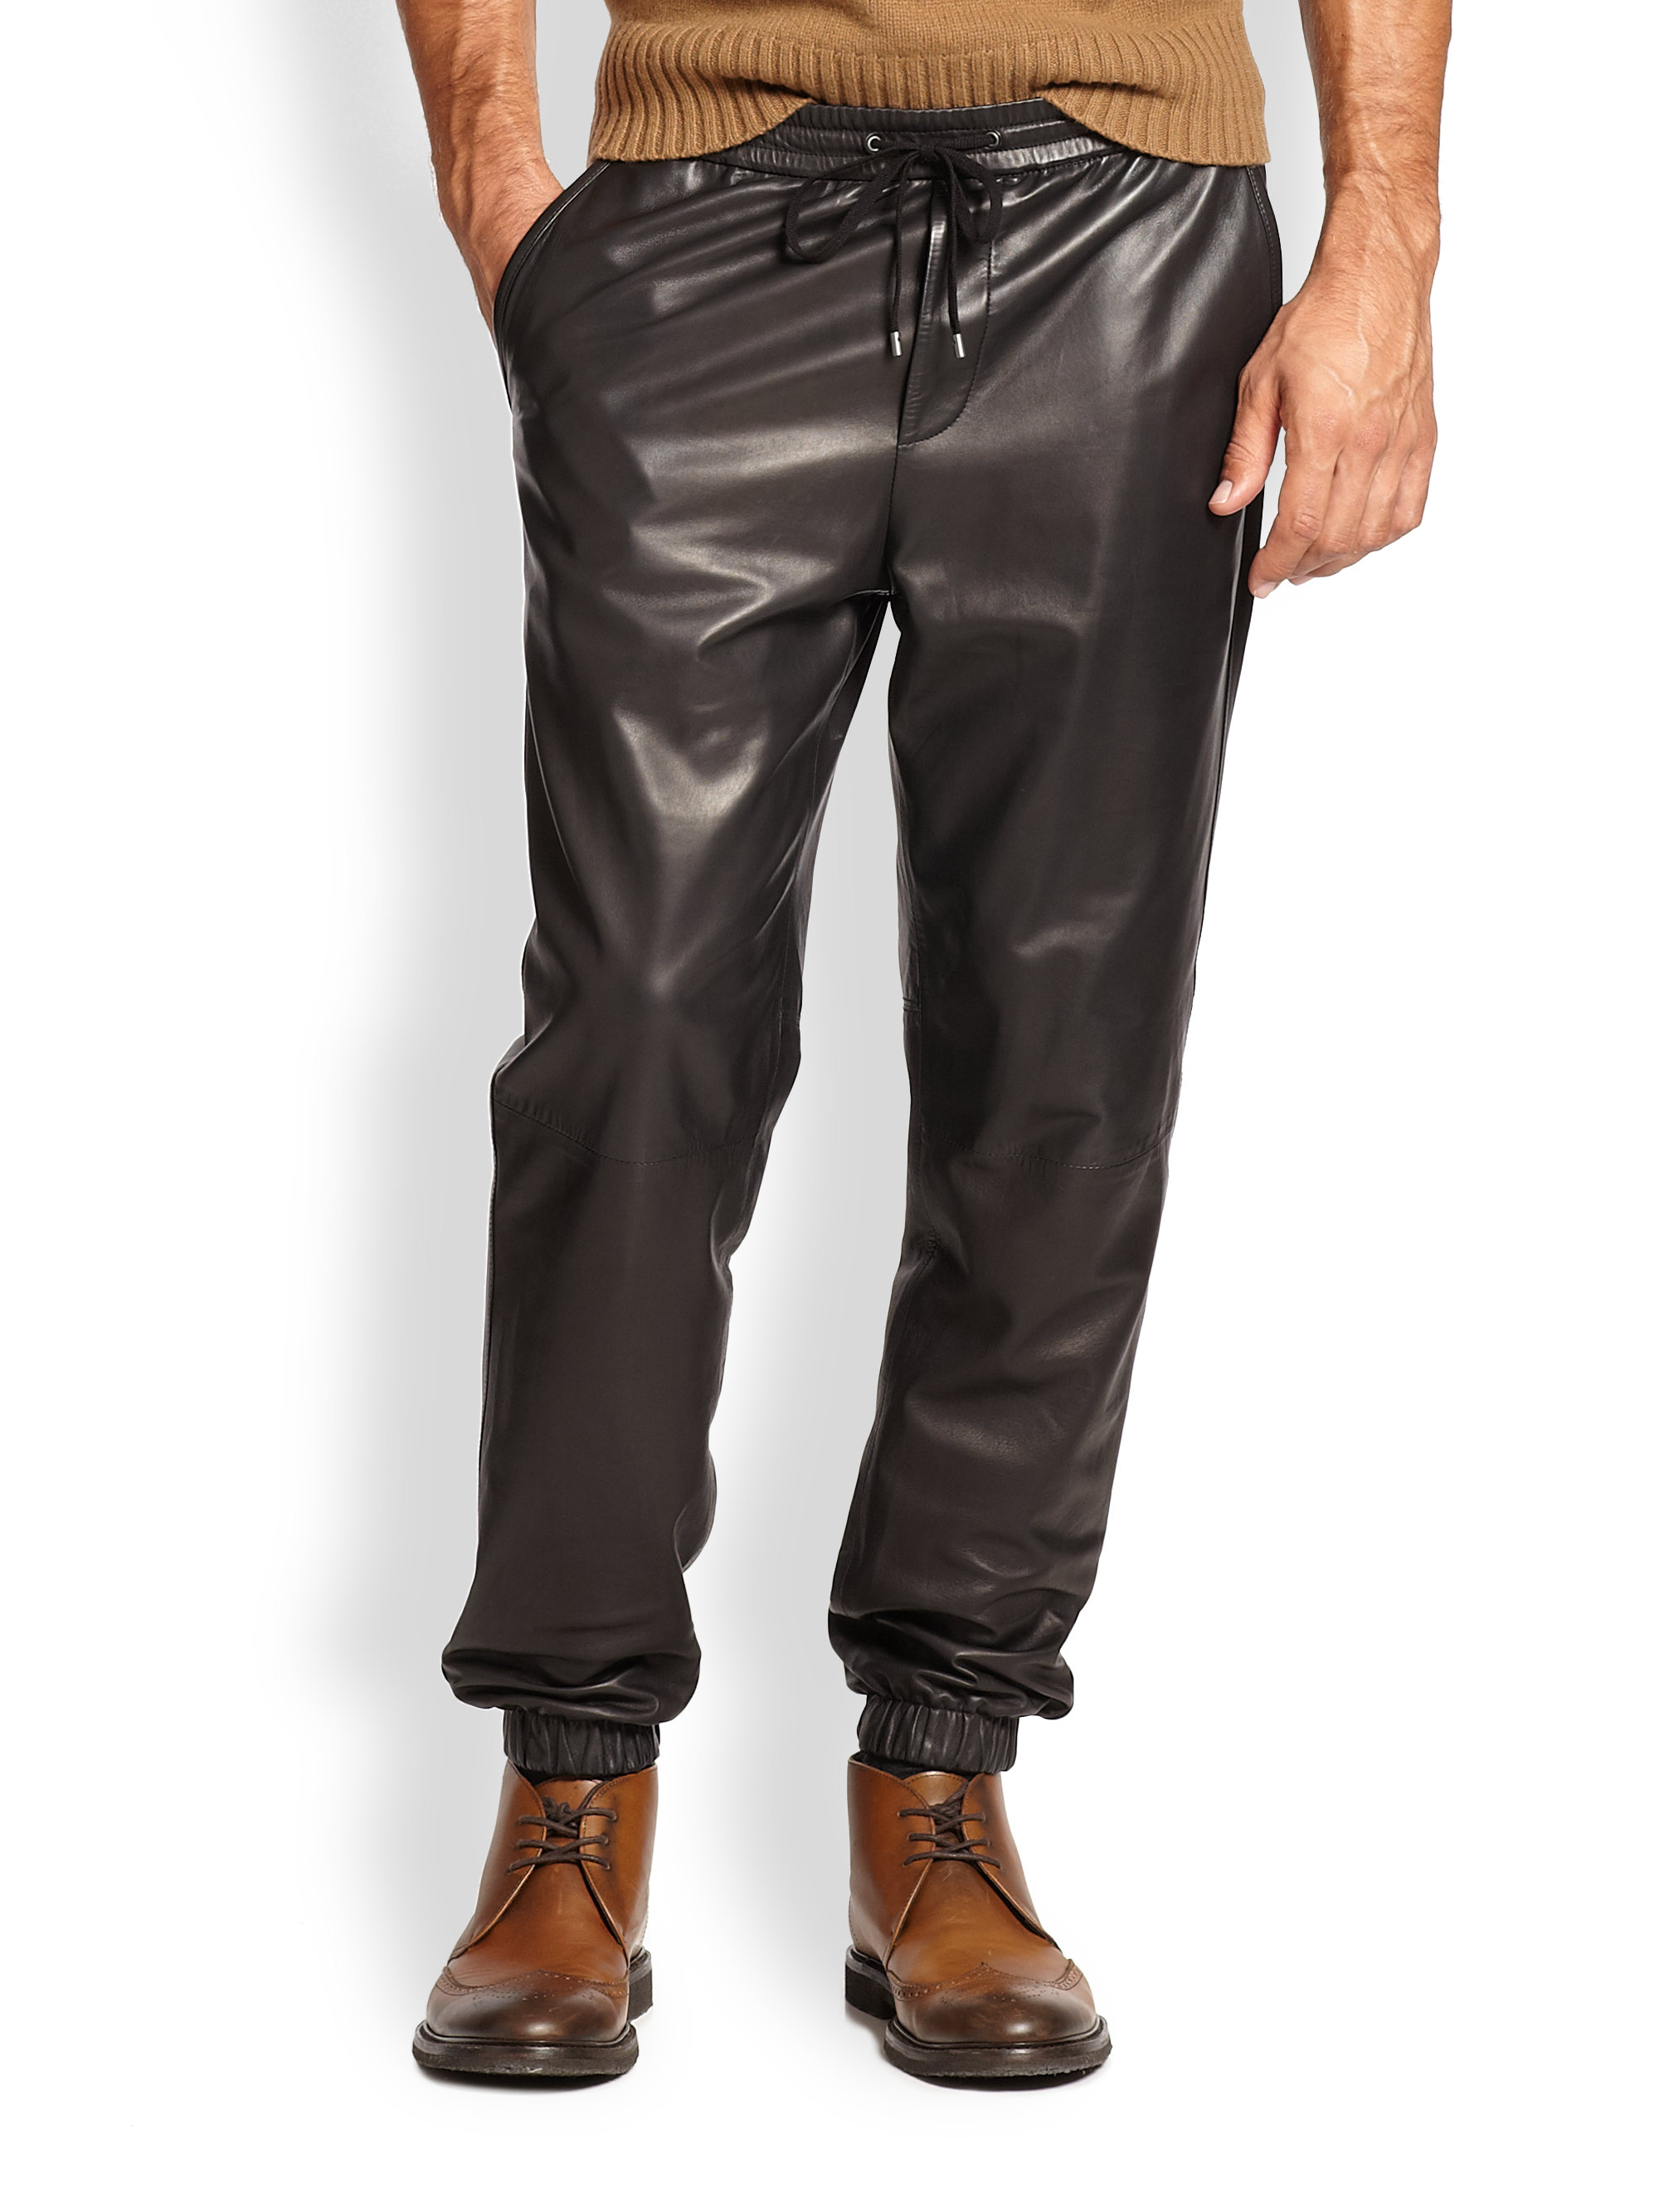 Lyst - Vince Leather Jogger Pants in Black for Men